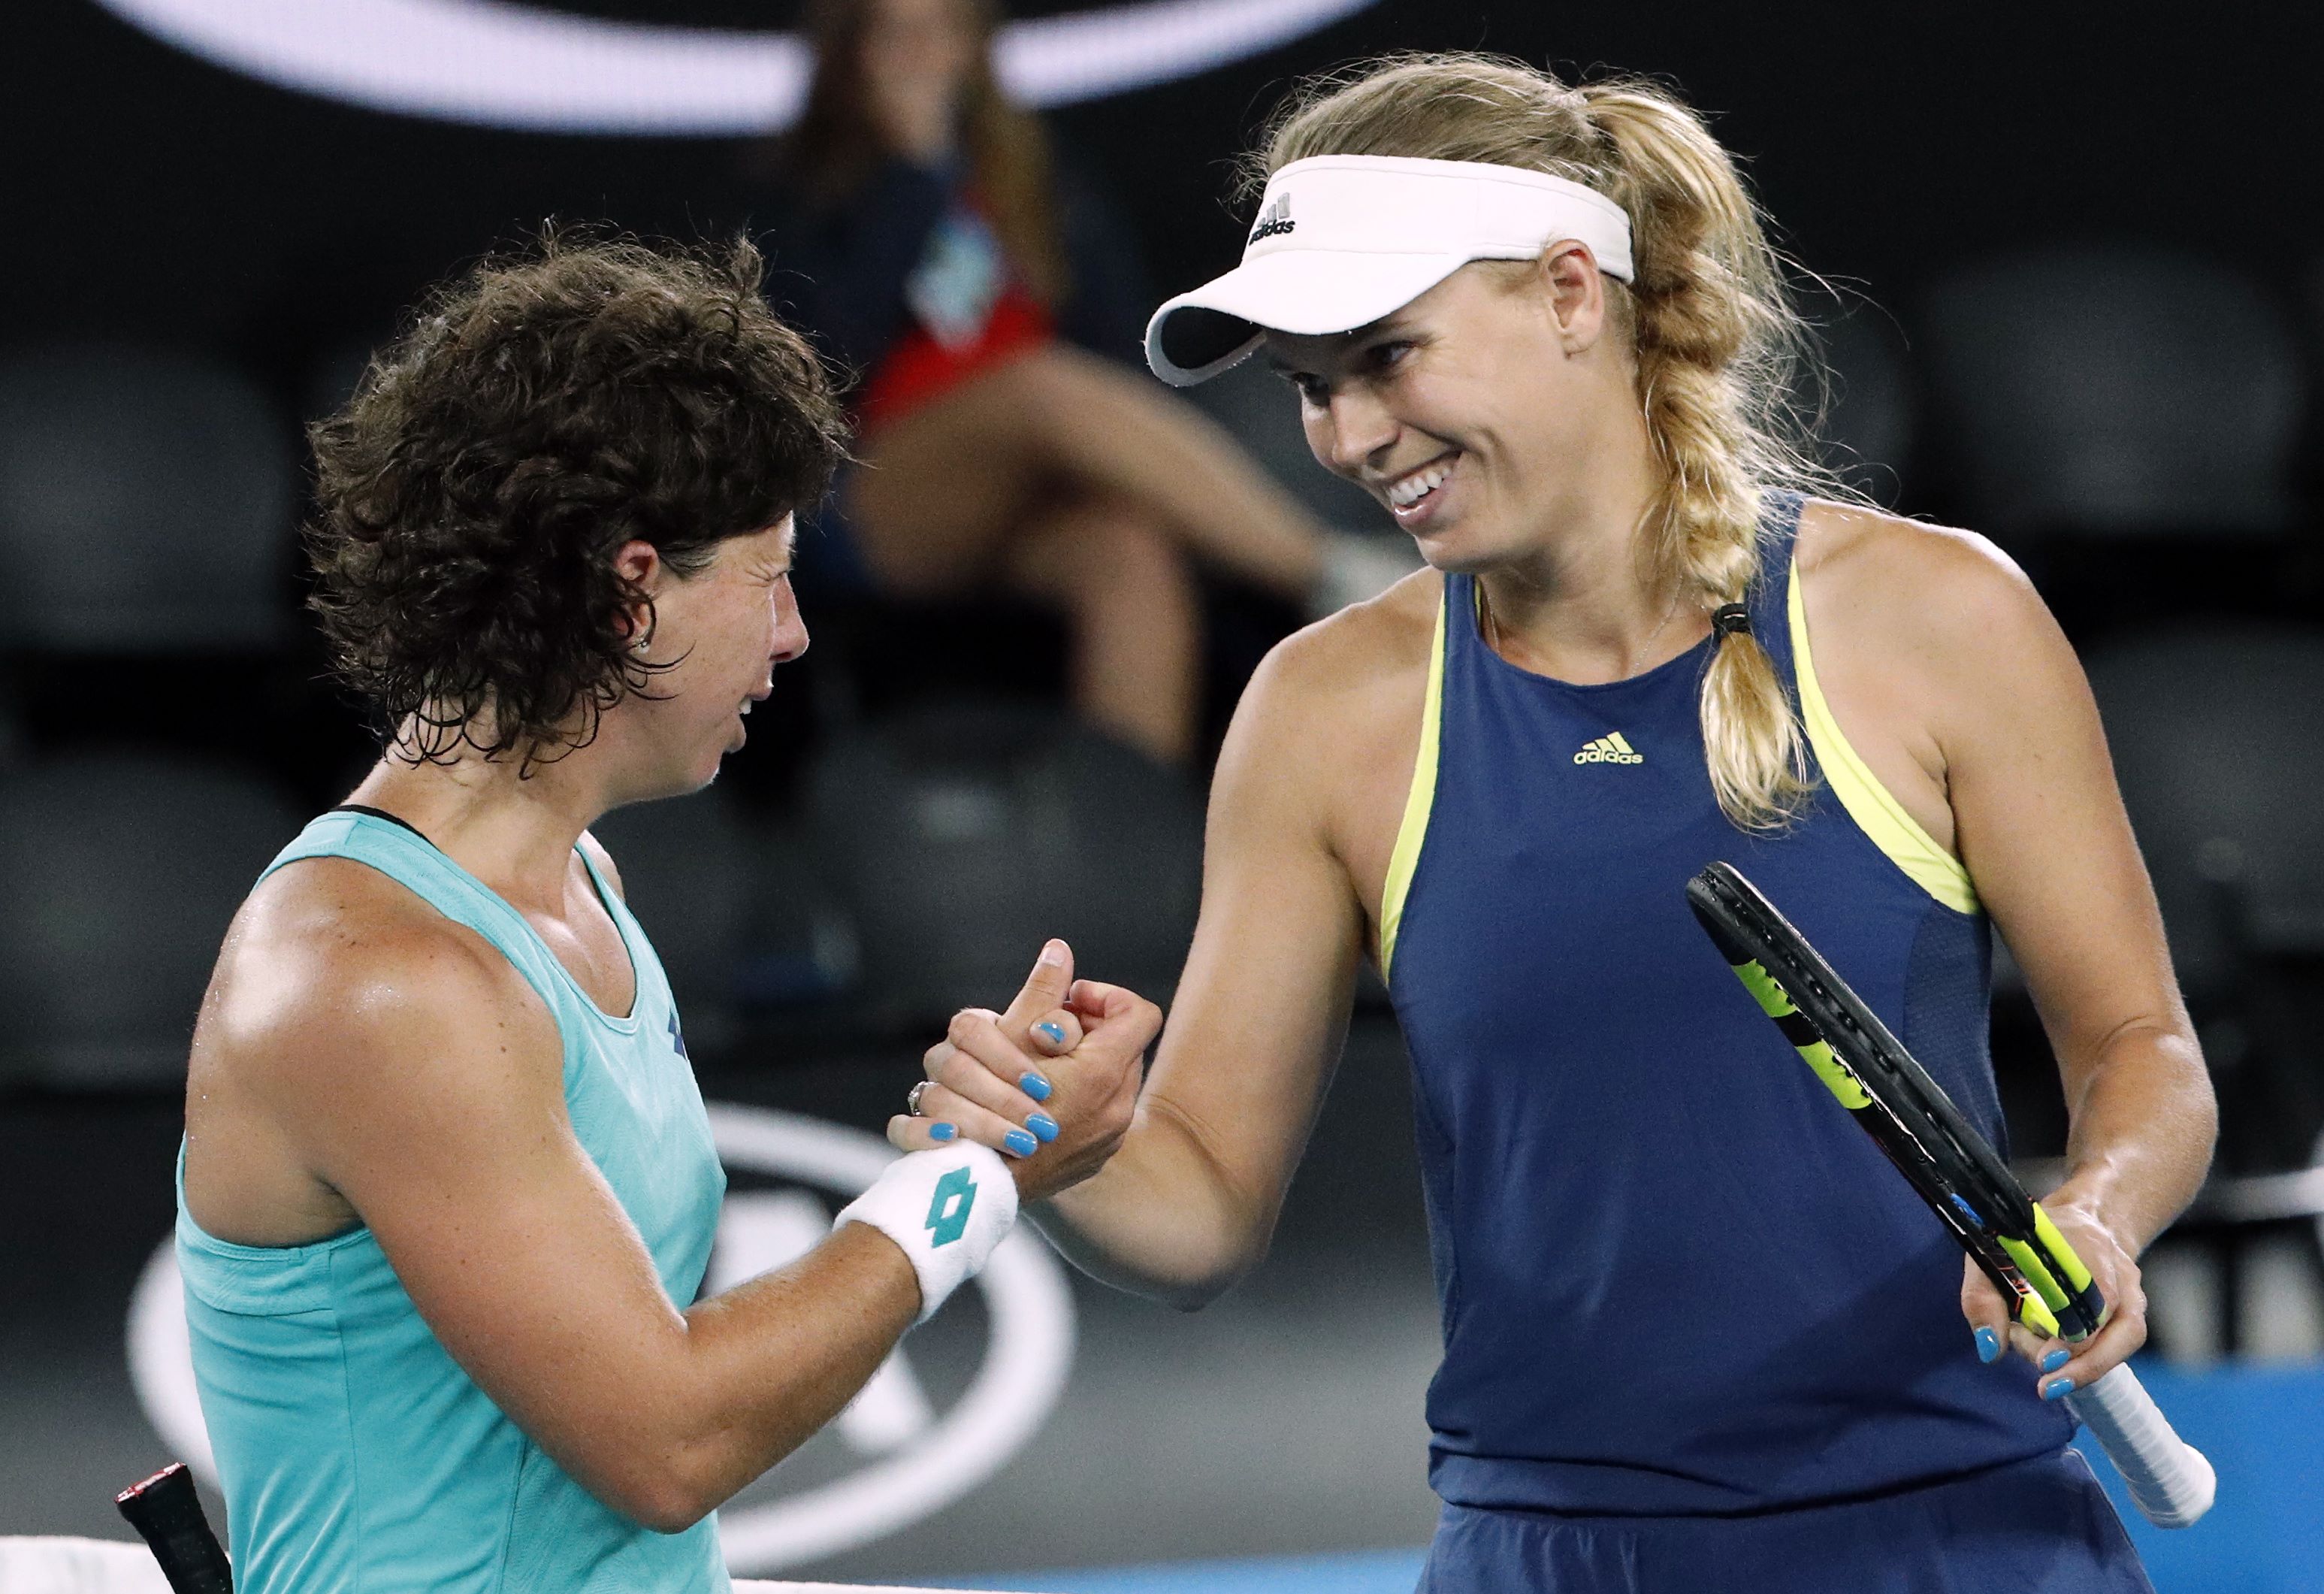 Tennis: Wozniacki sees off Navarro to reach semifinals